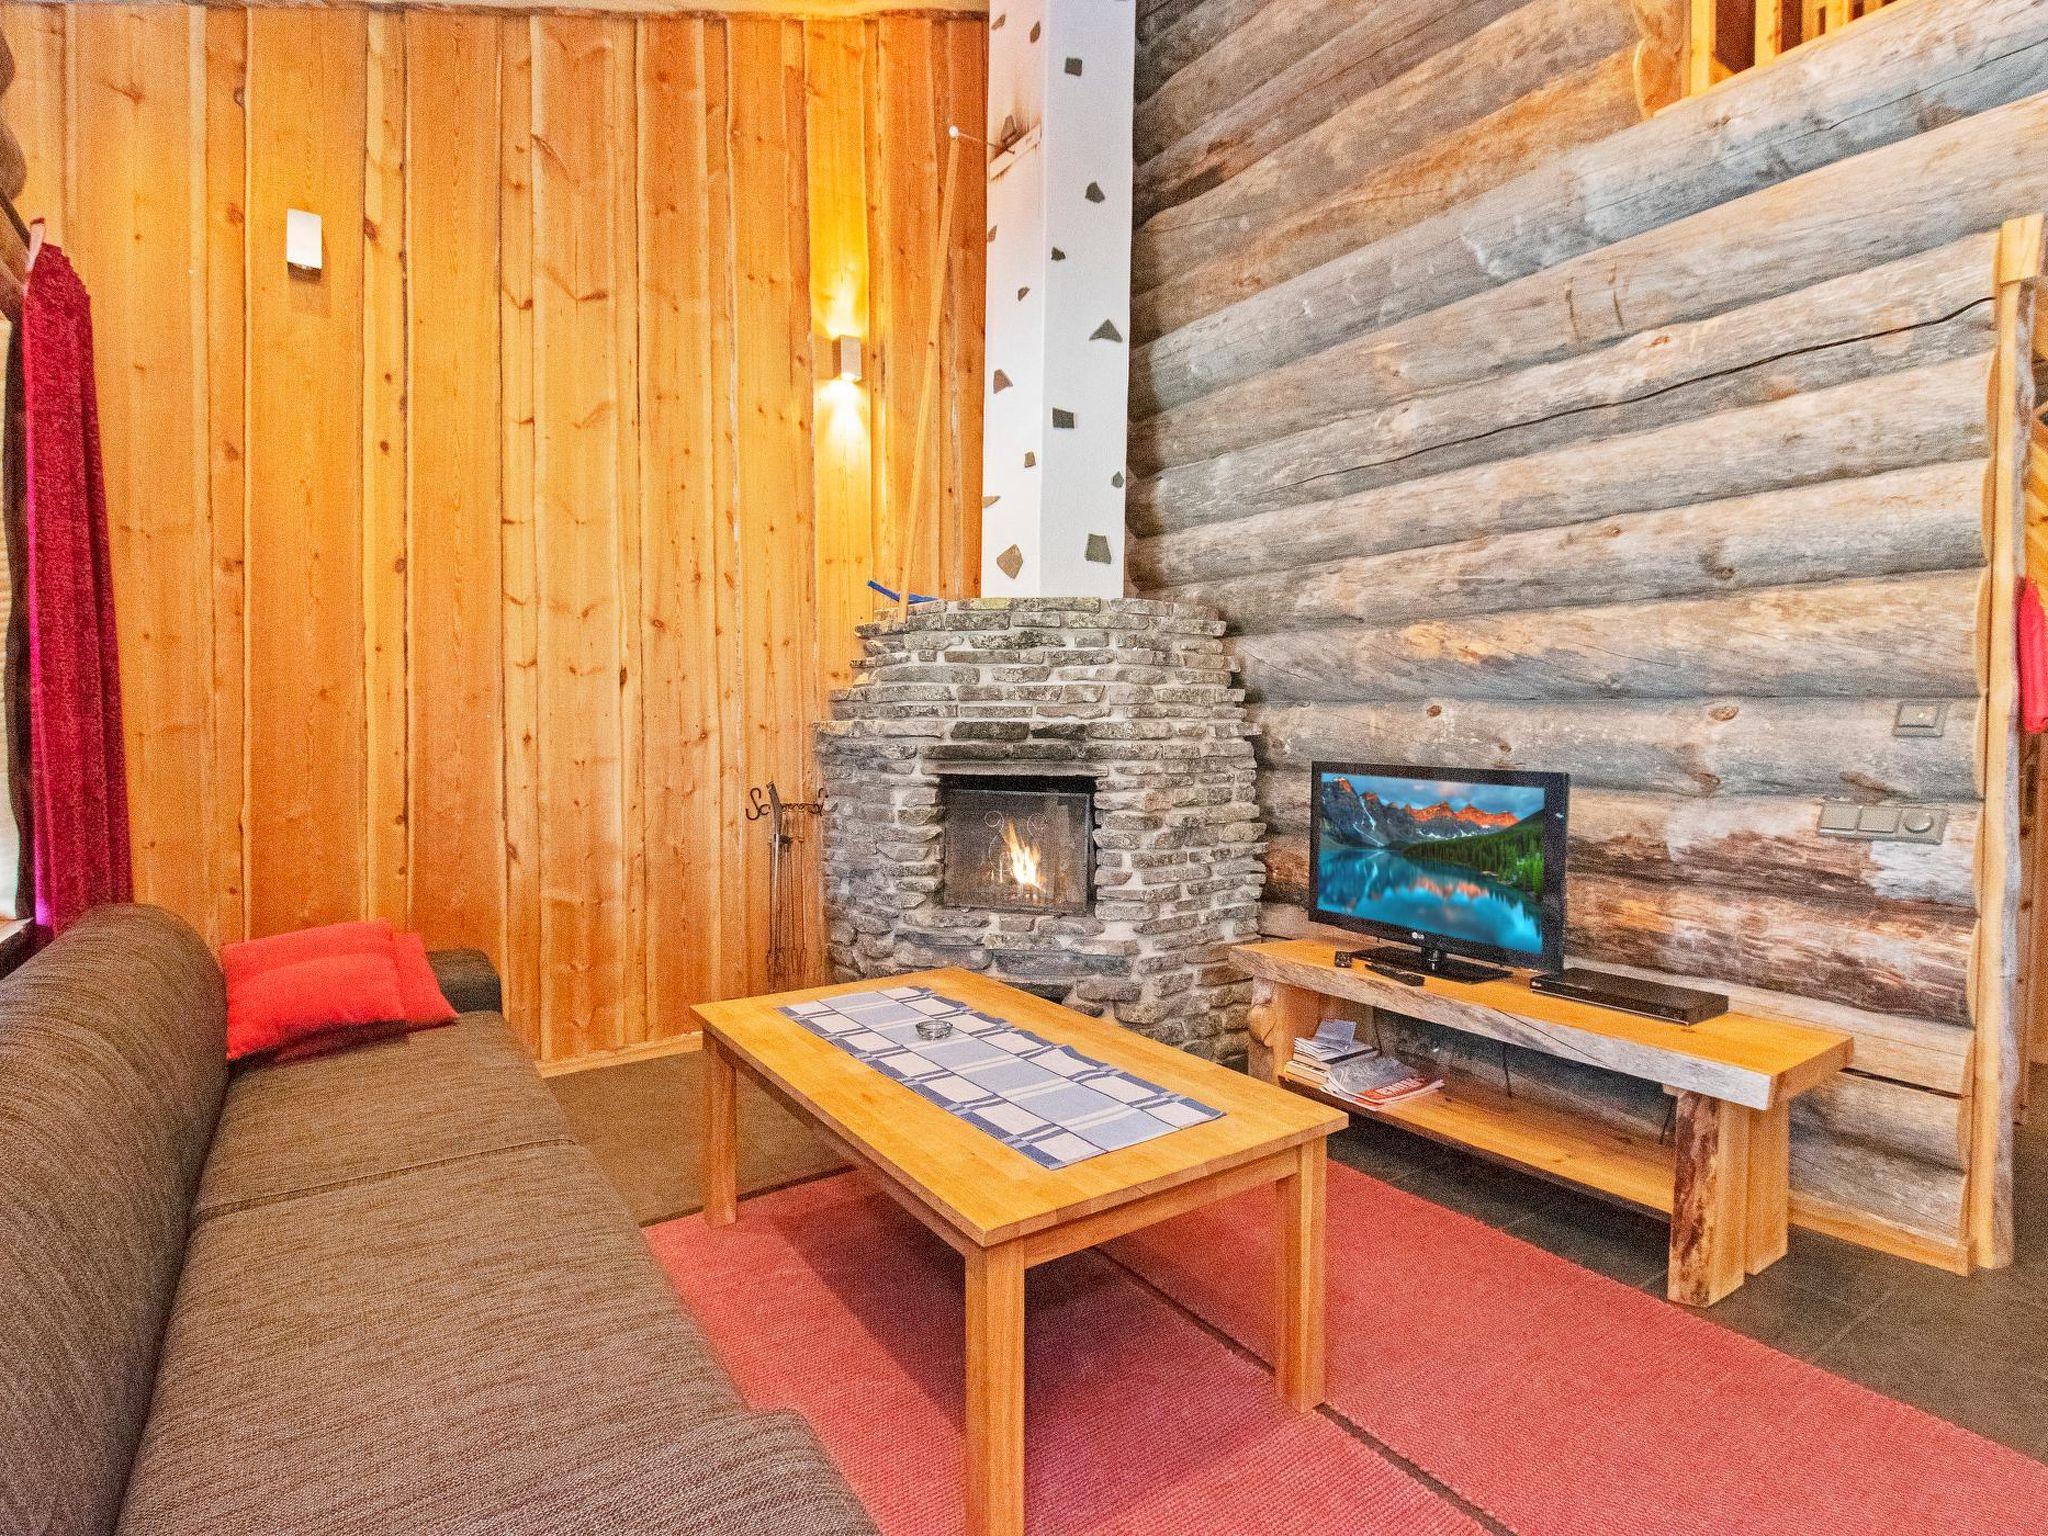 Photo 5 - 2 bedroom House in Kuusamo with sauna and mountain view